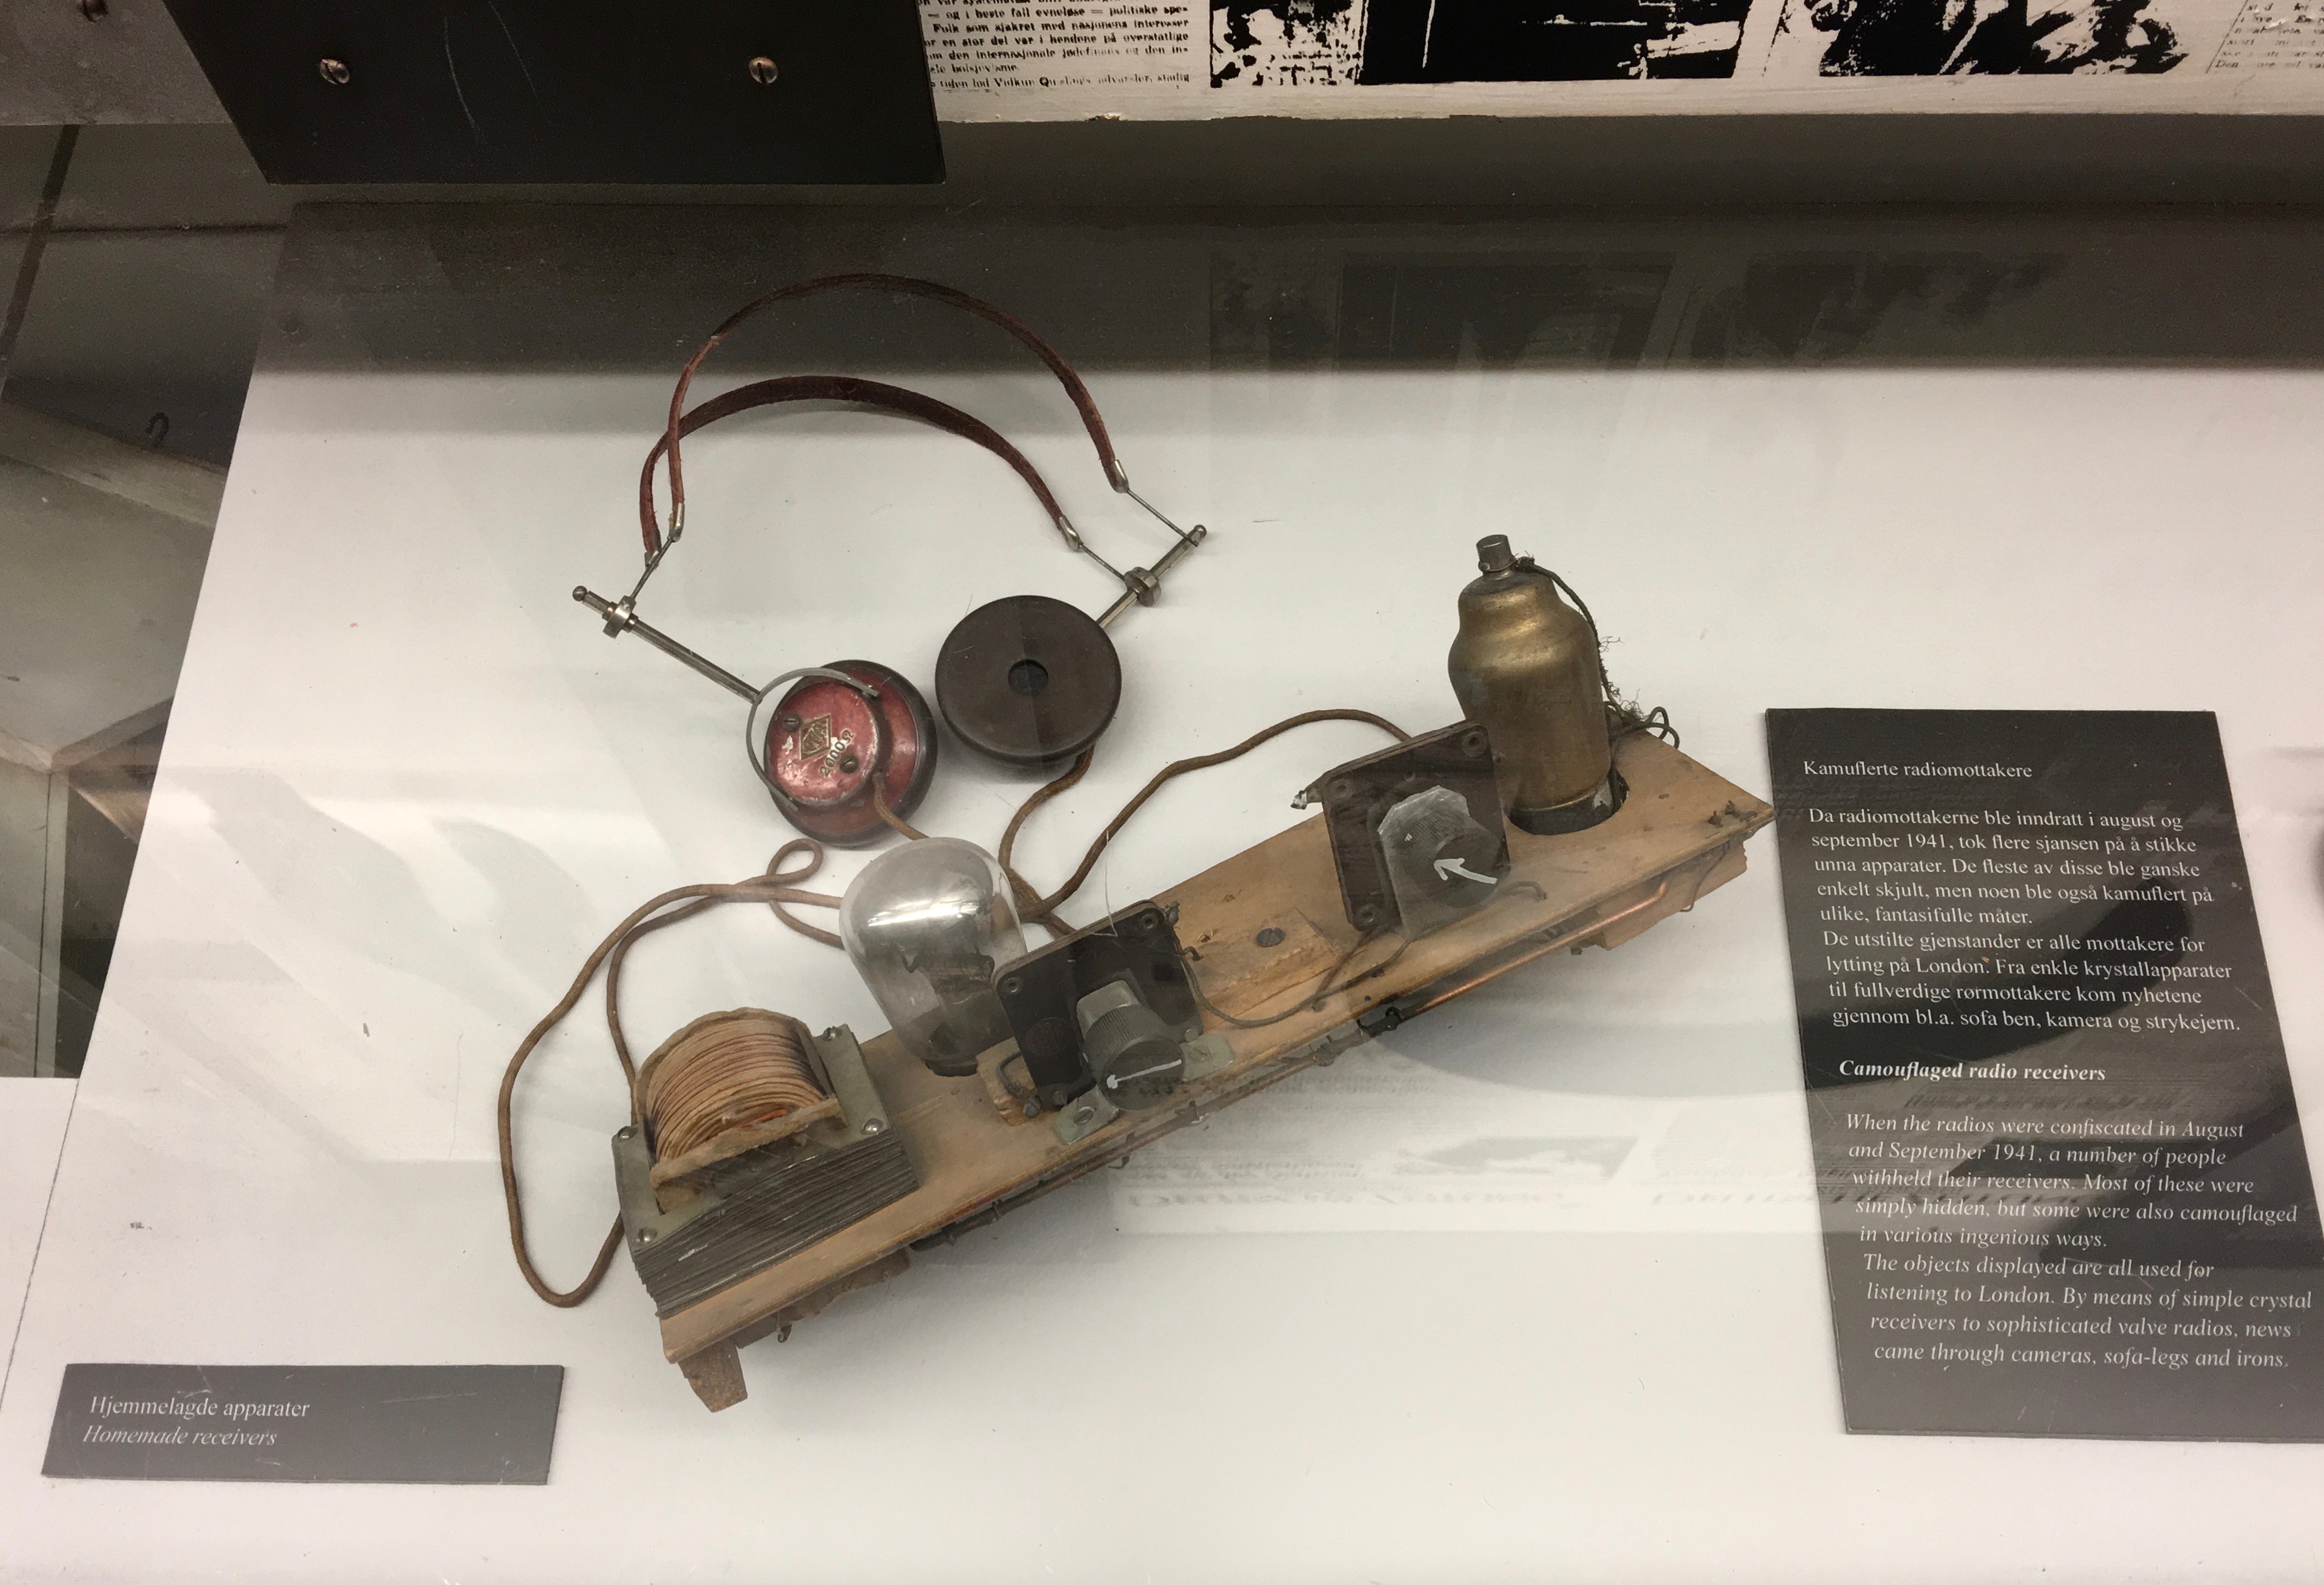 File:Norway's WW2 Resistance Museum, Oslo (Hjemmefrontmuseet). Illegal radio  receivers, homemade crystal receiver (hjemmelagd radio, krystallmottaker  for lytting på London). Photo 2017-11-30 c.jpg - Wikimedia Commons